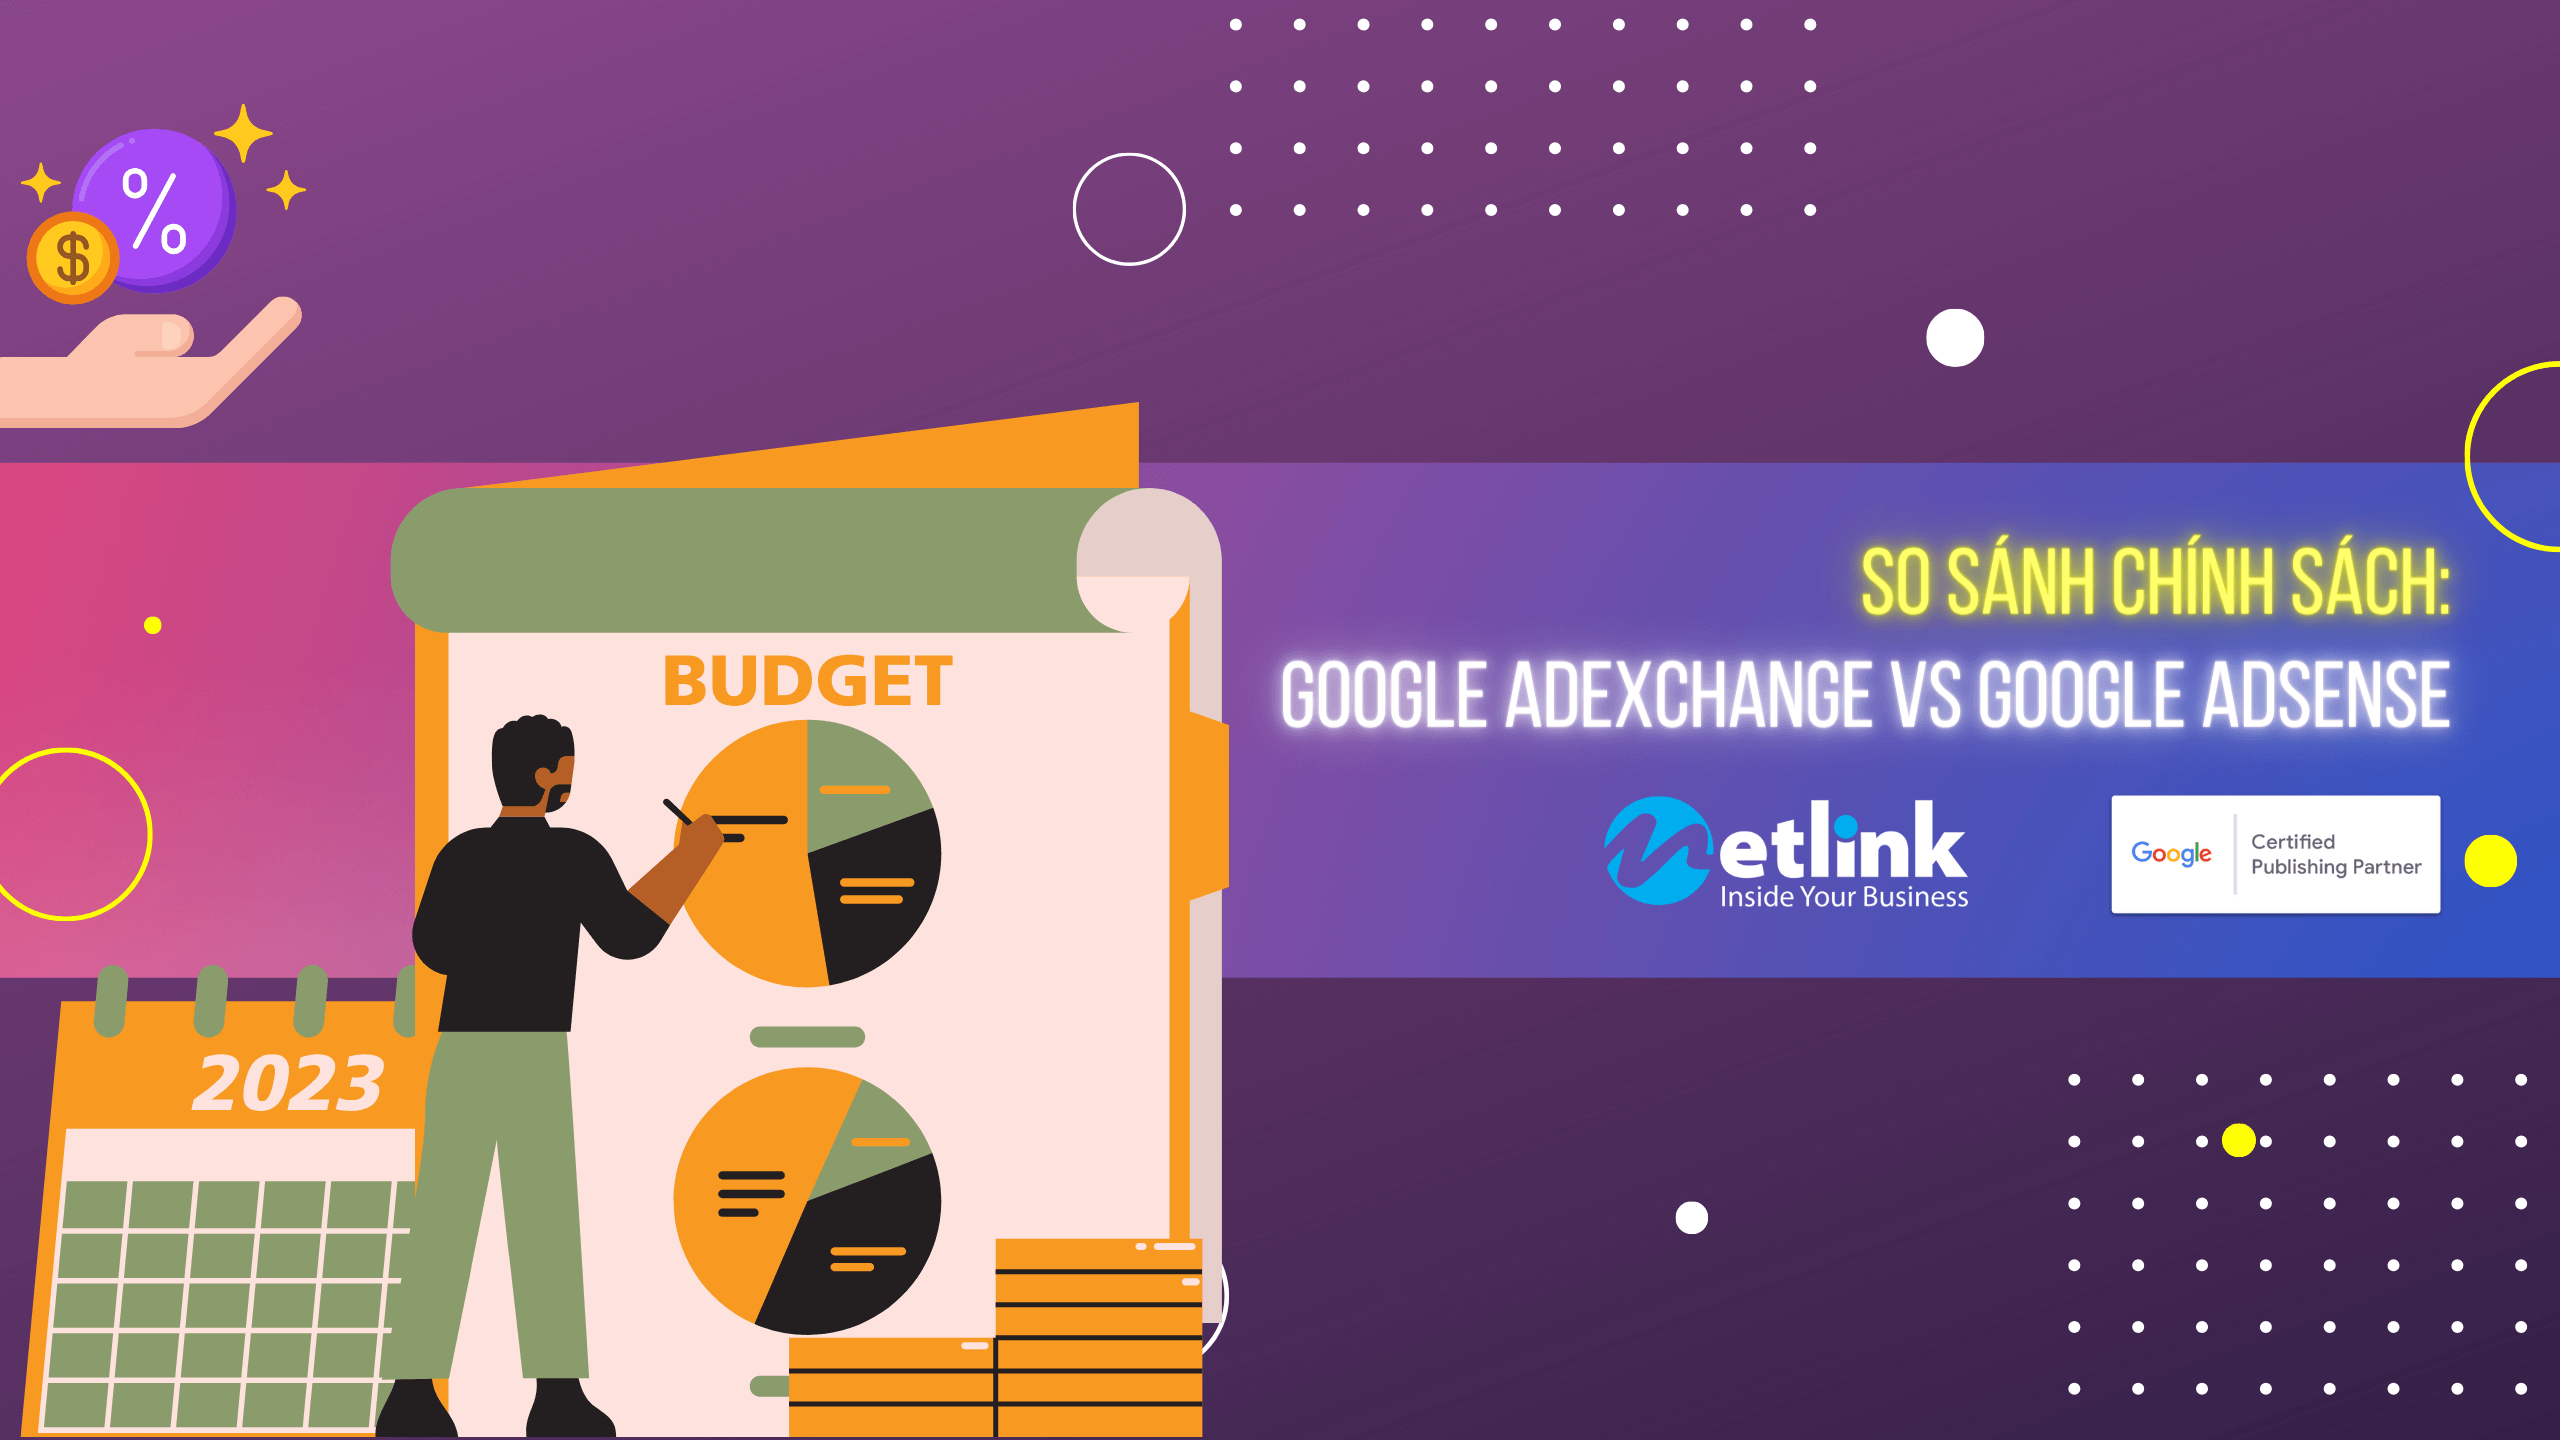 So Sánh Chính Sách: Google AdExchange vs. Google AdSense